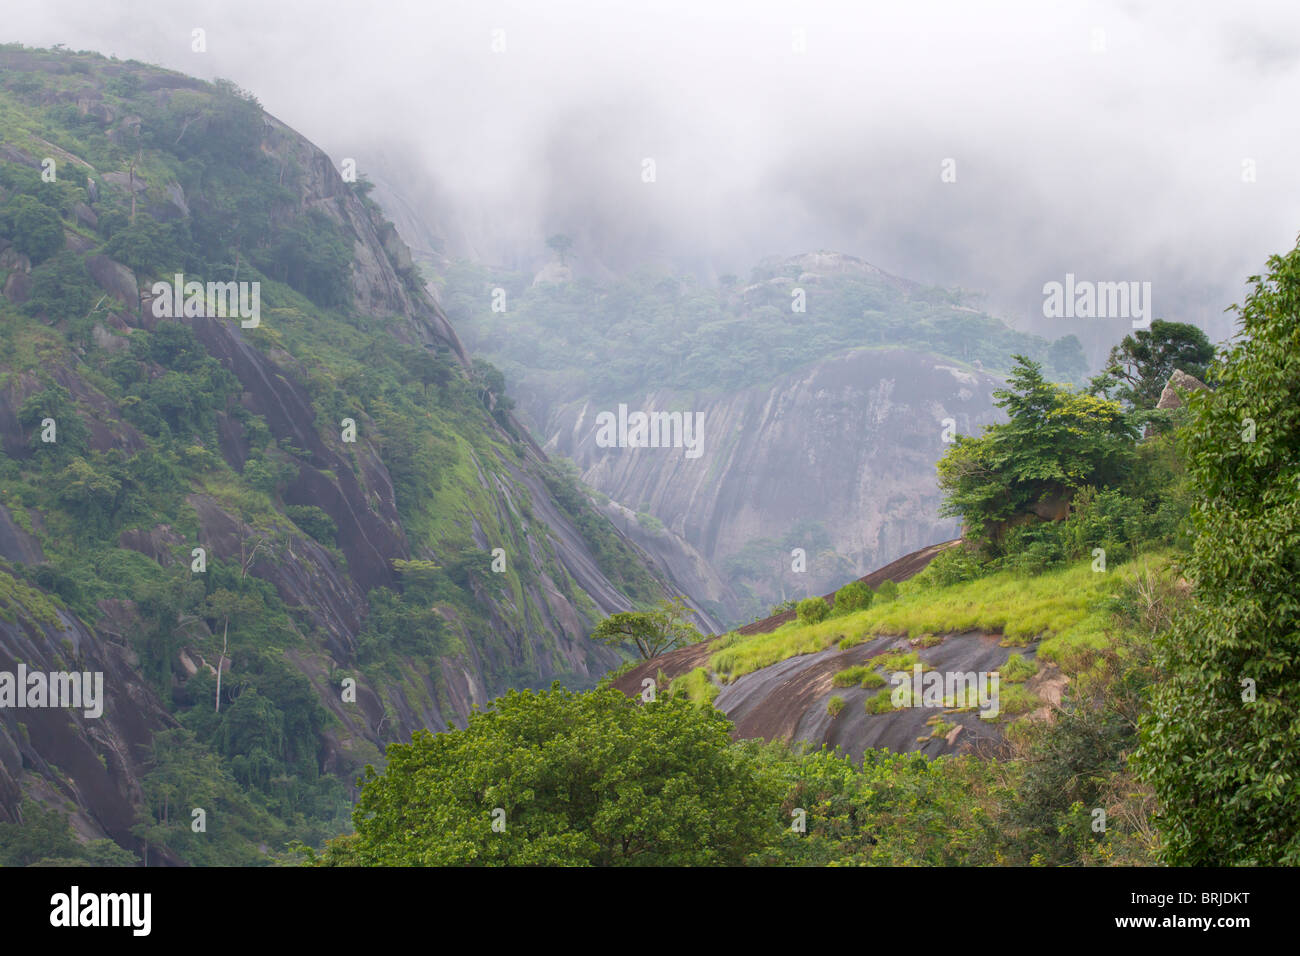 A mountain rain forest, Idanre, Ondo state, Nigeria. Stock Photo